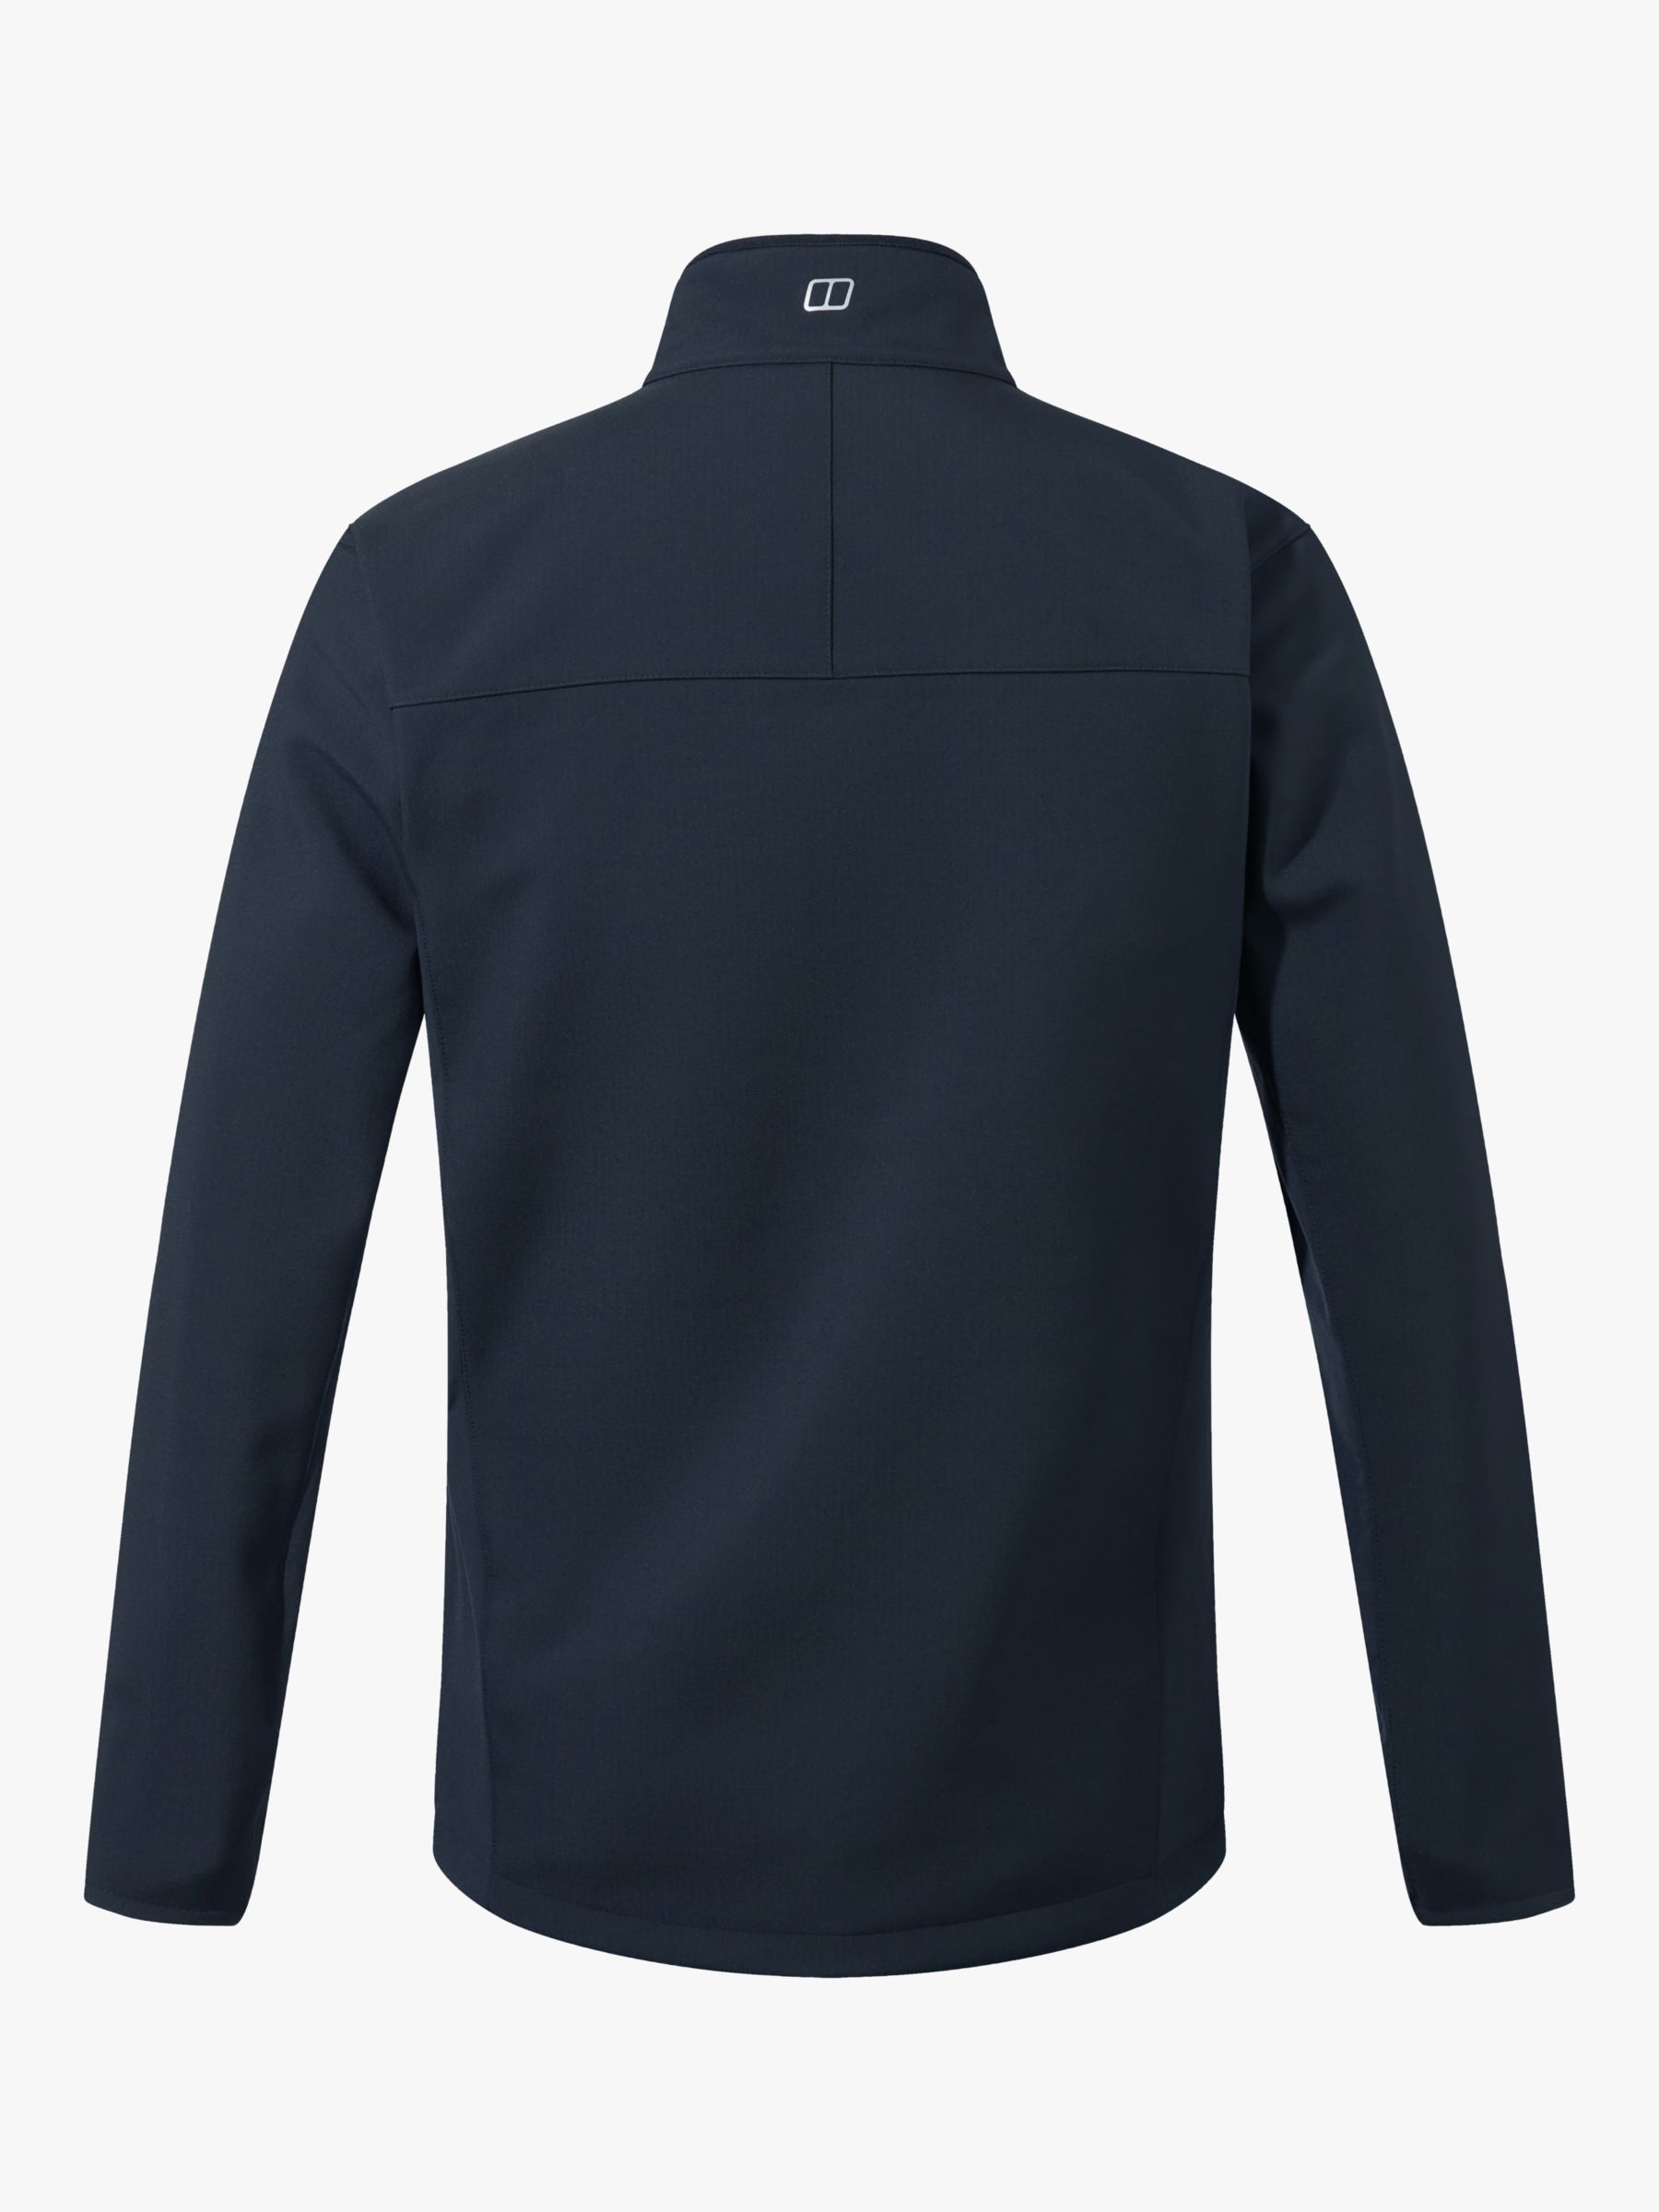 Berghaus Ghlas 2.0 Men's Softshell Jacket, Jet Black, XL